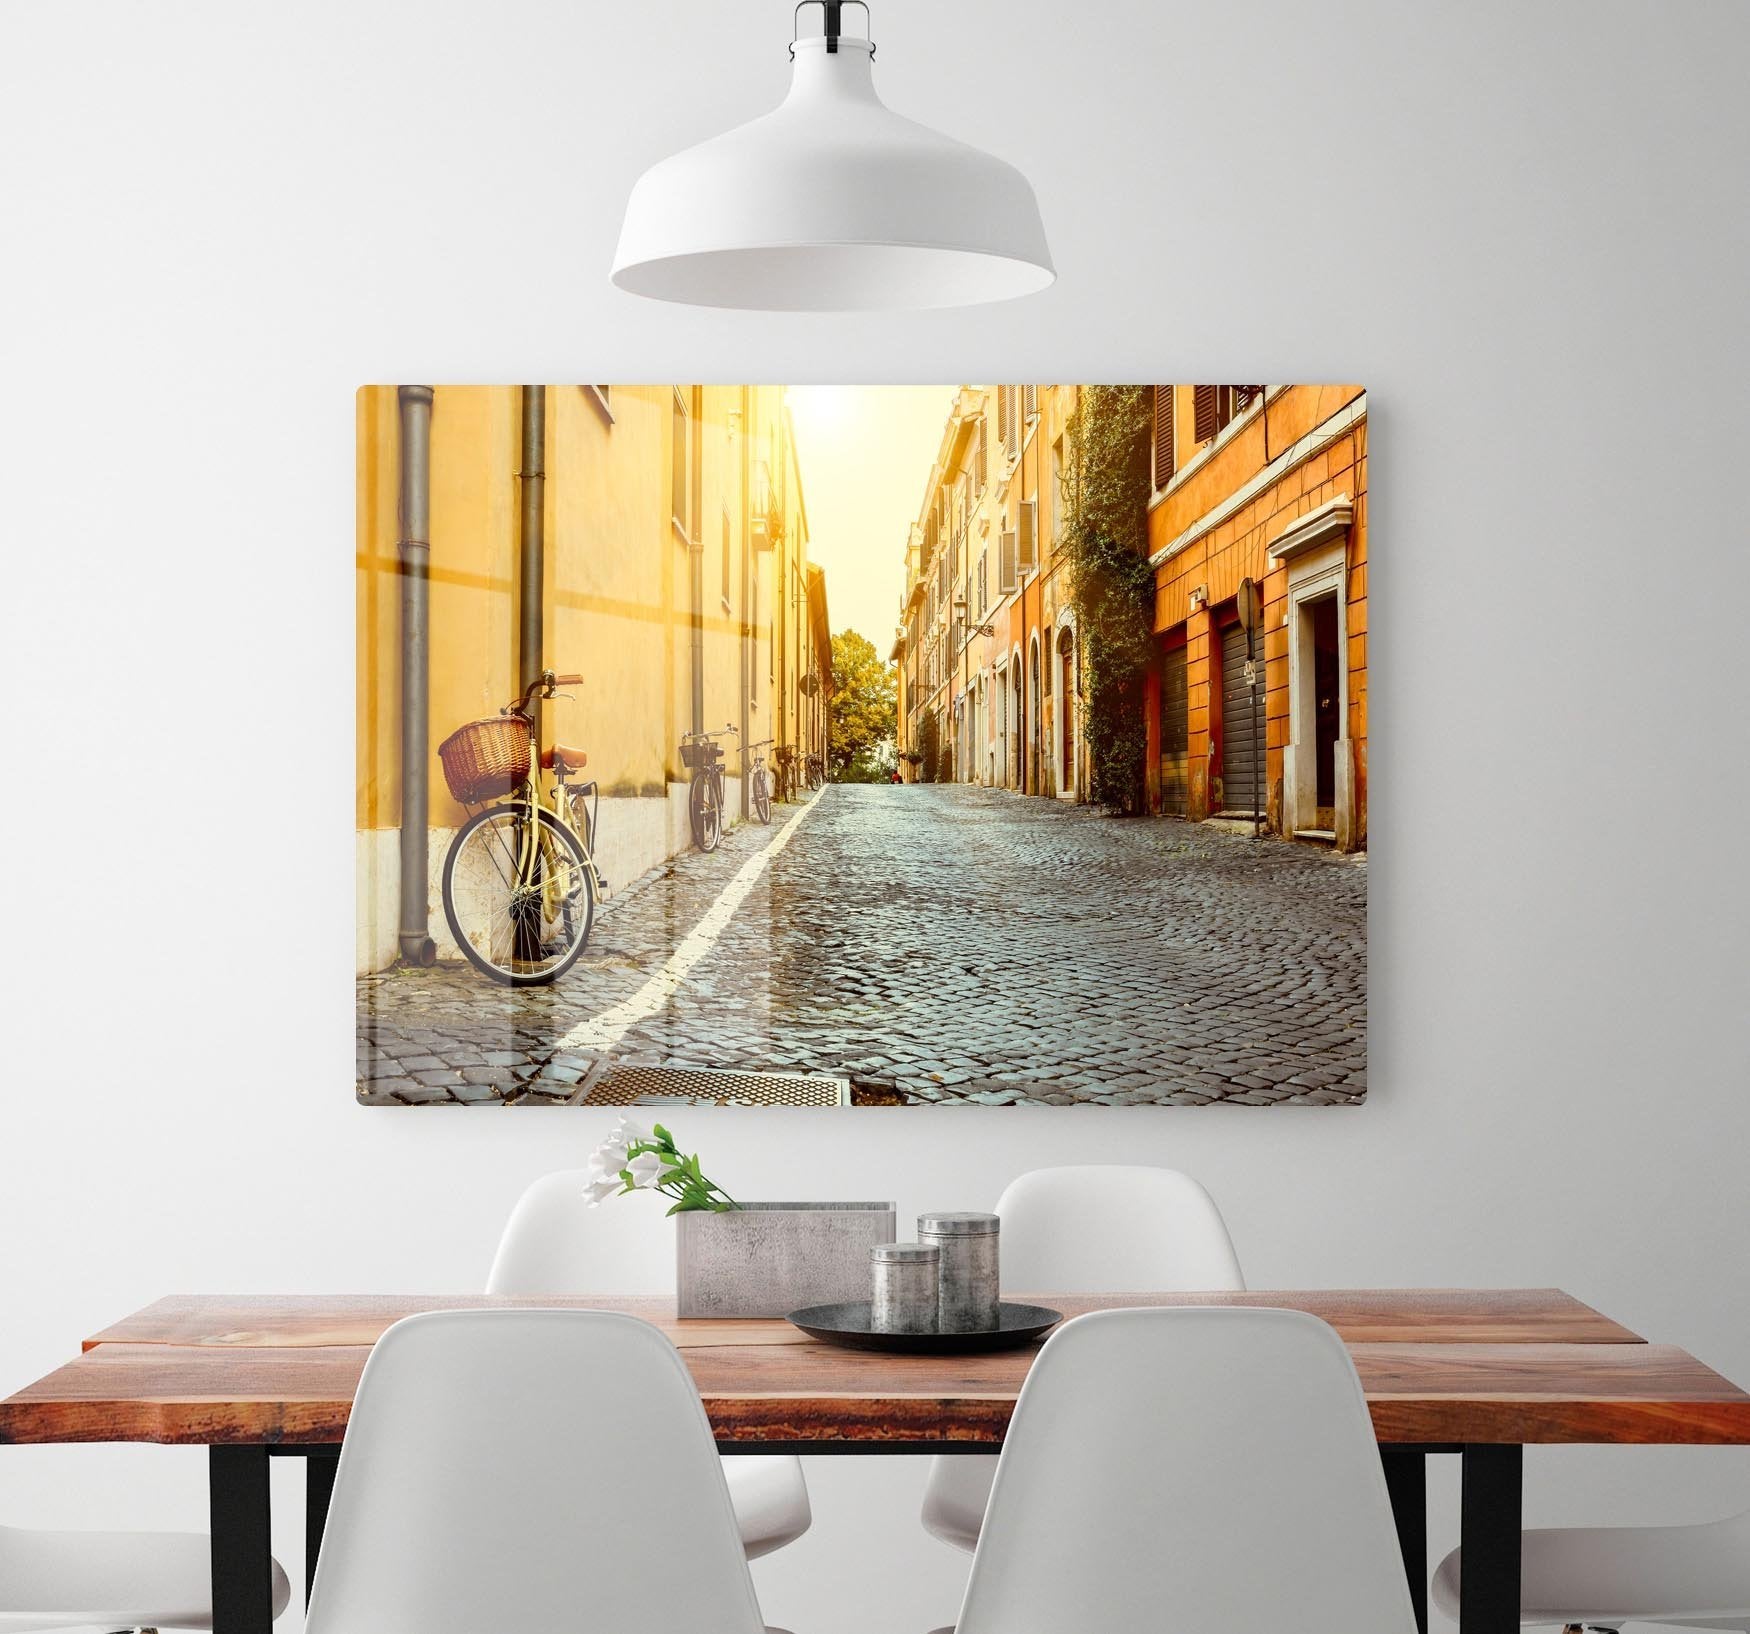 Old street in Rome HD Metal Print